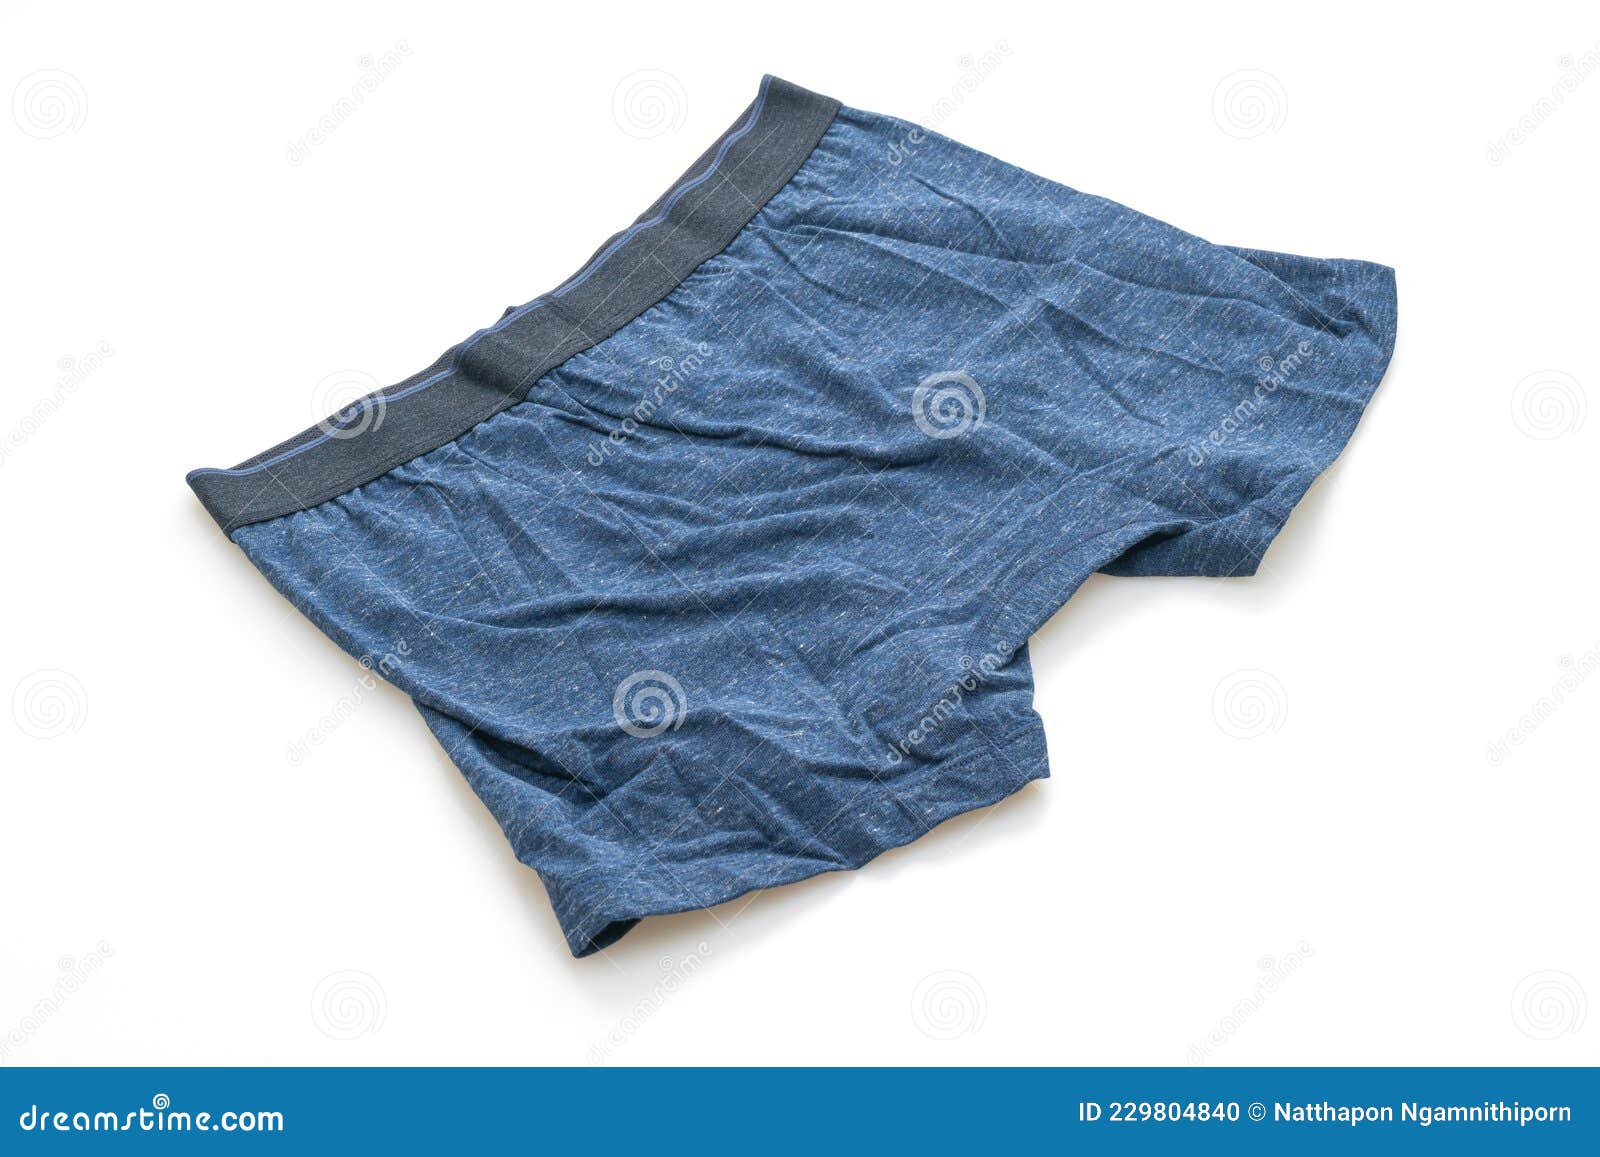 Blue Men Underwear on White Background Stock Photo - Image of single ...